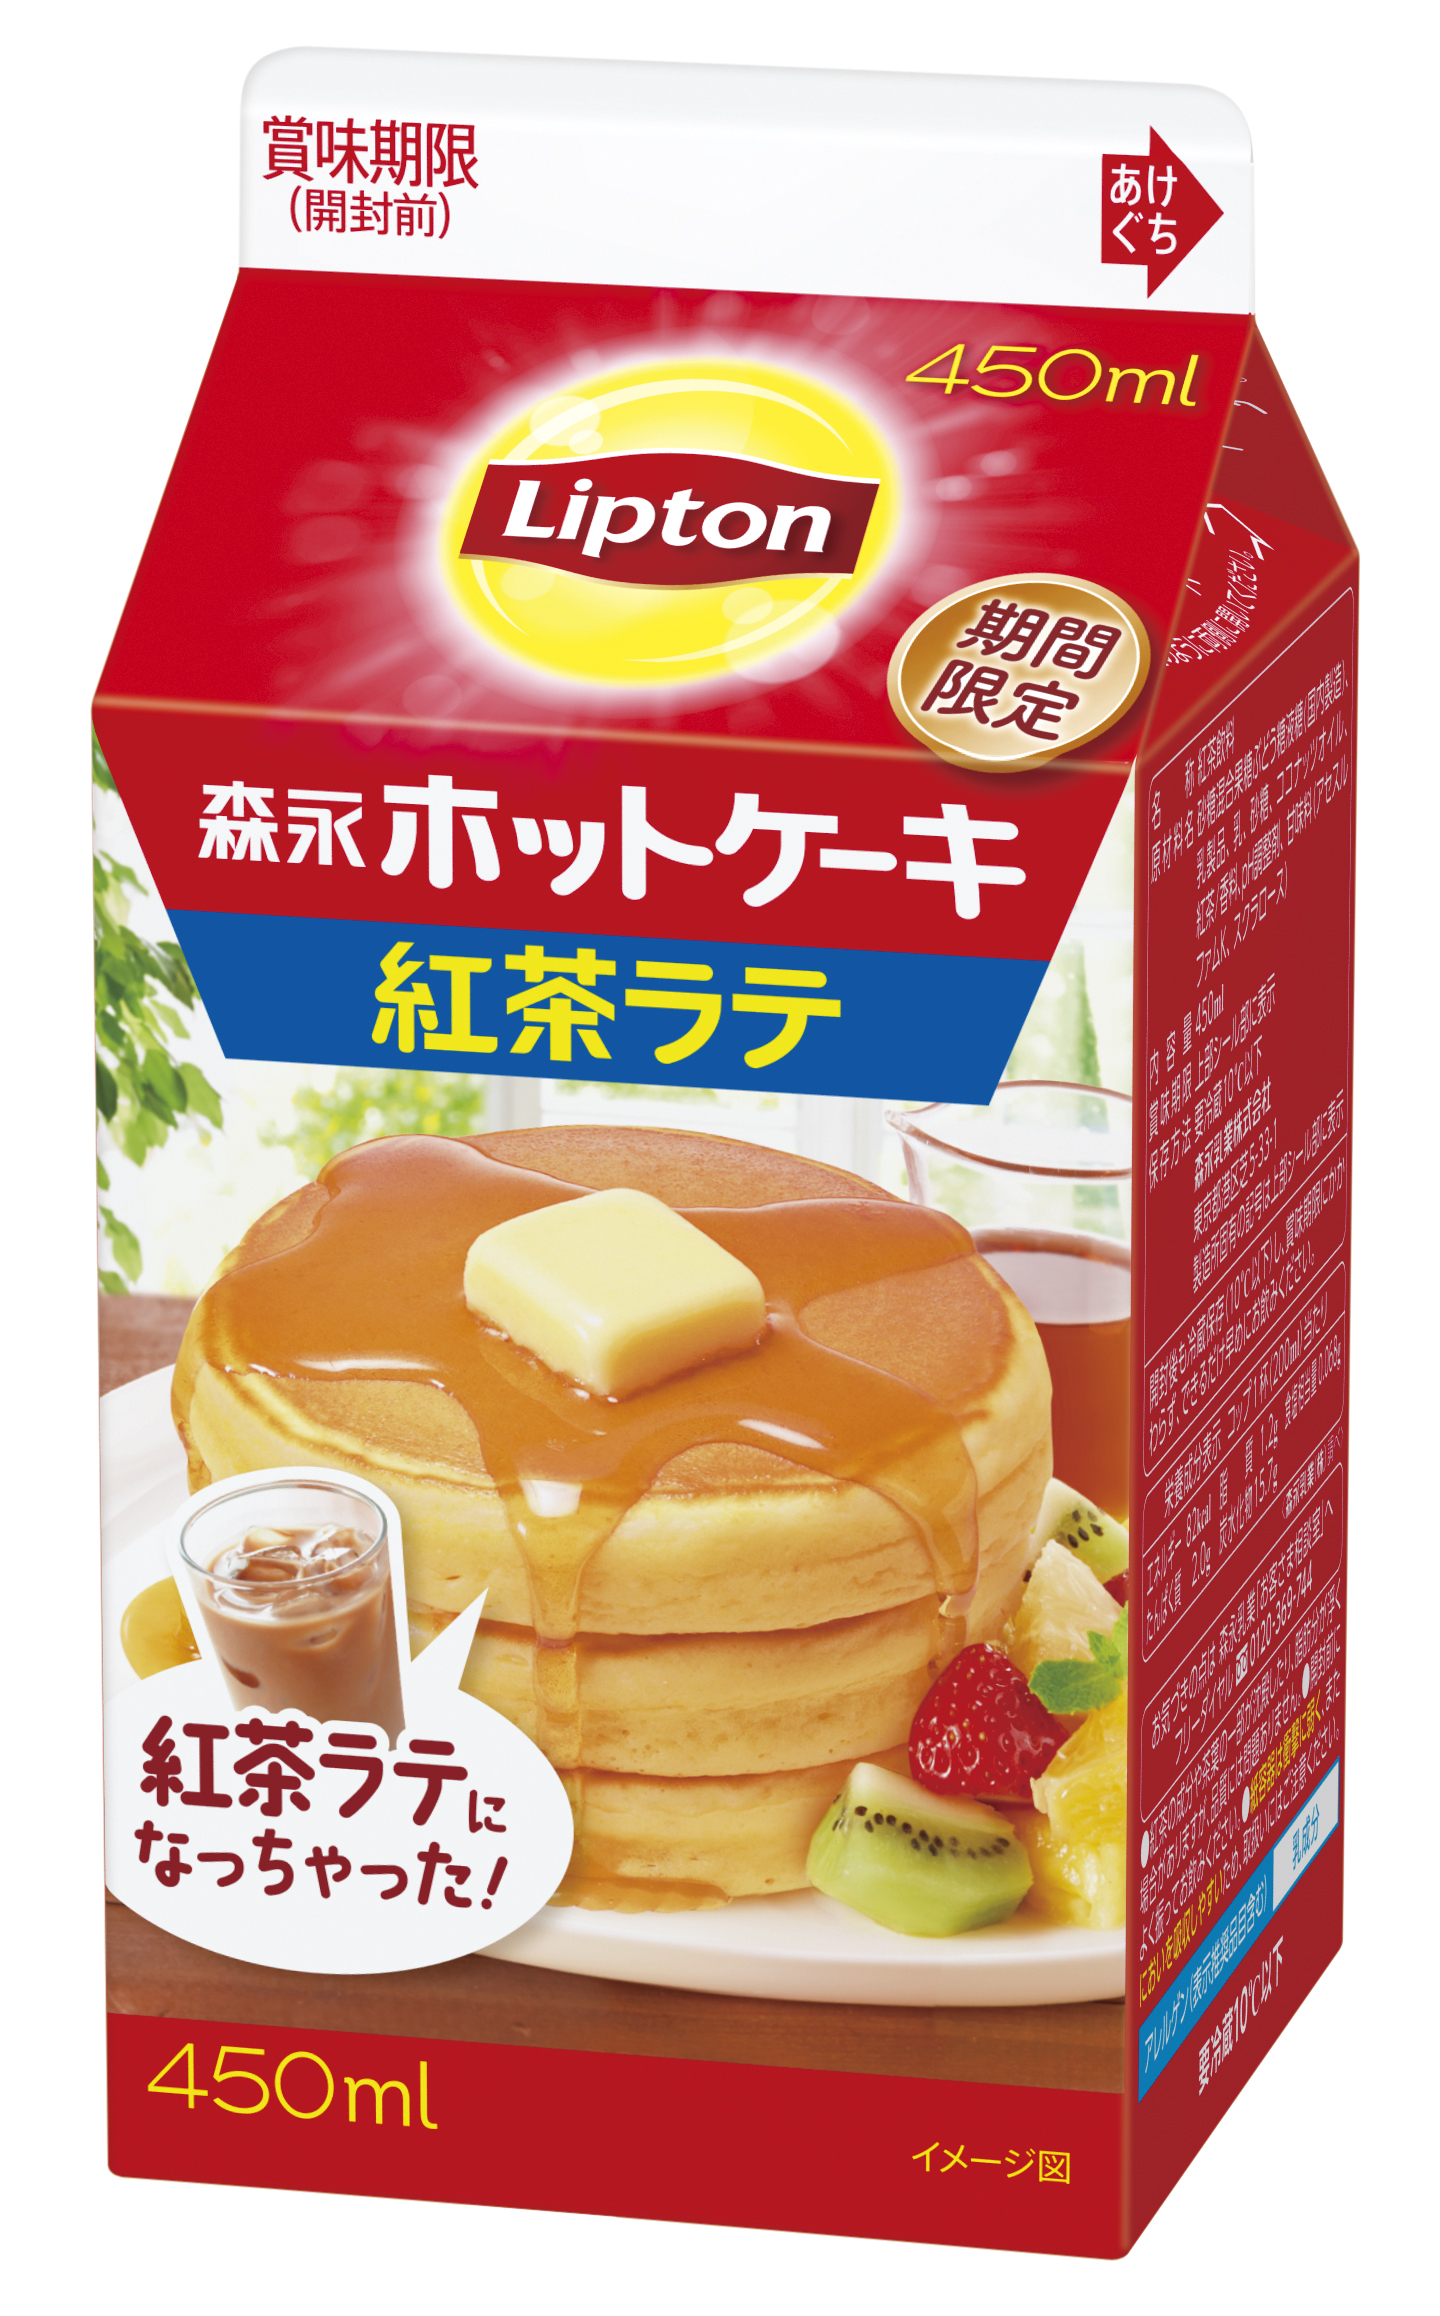 Lipton_450ml_Hot Cake TeaLatte